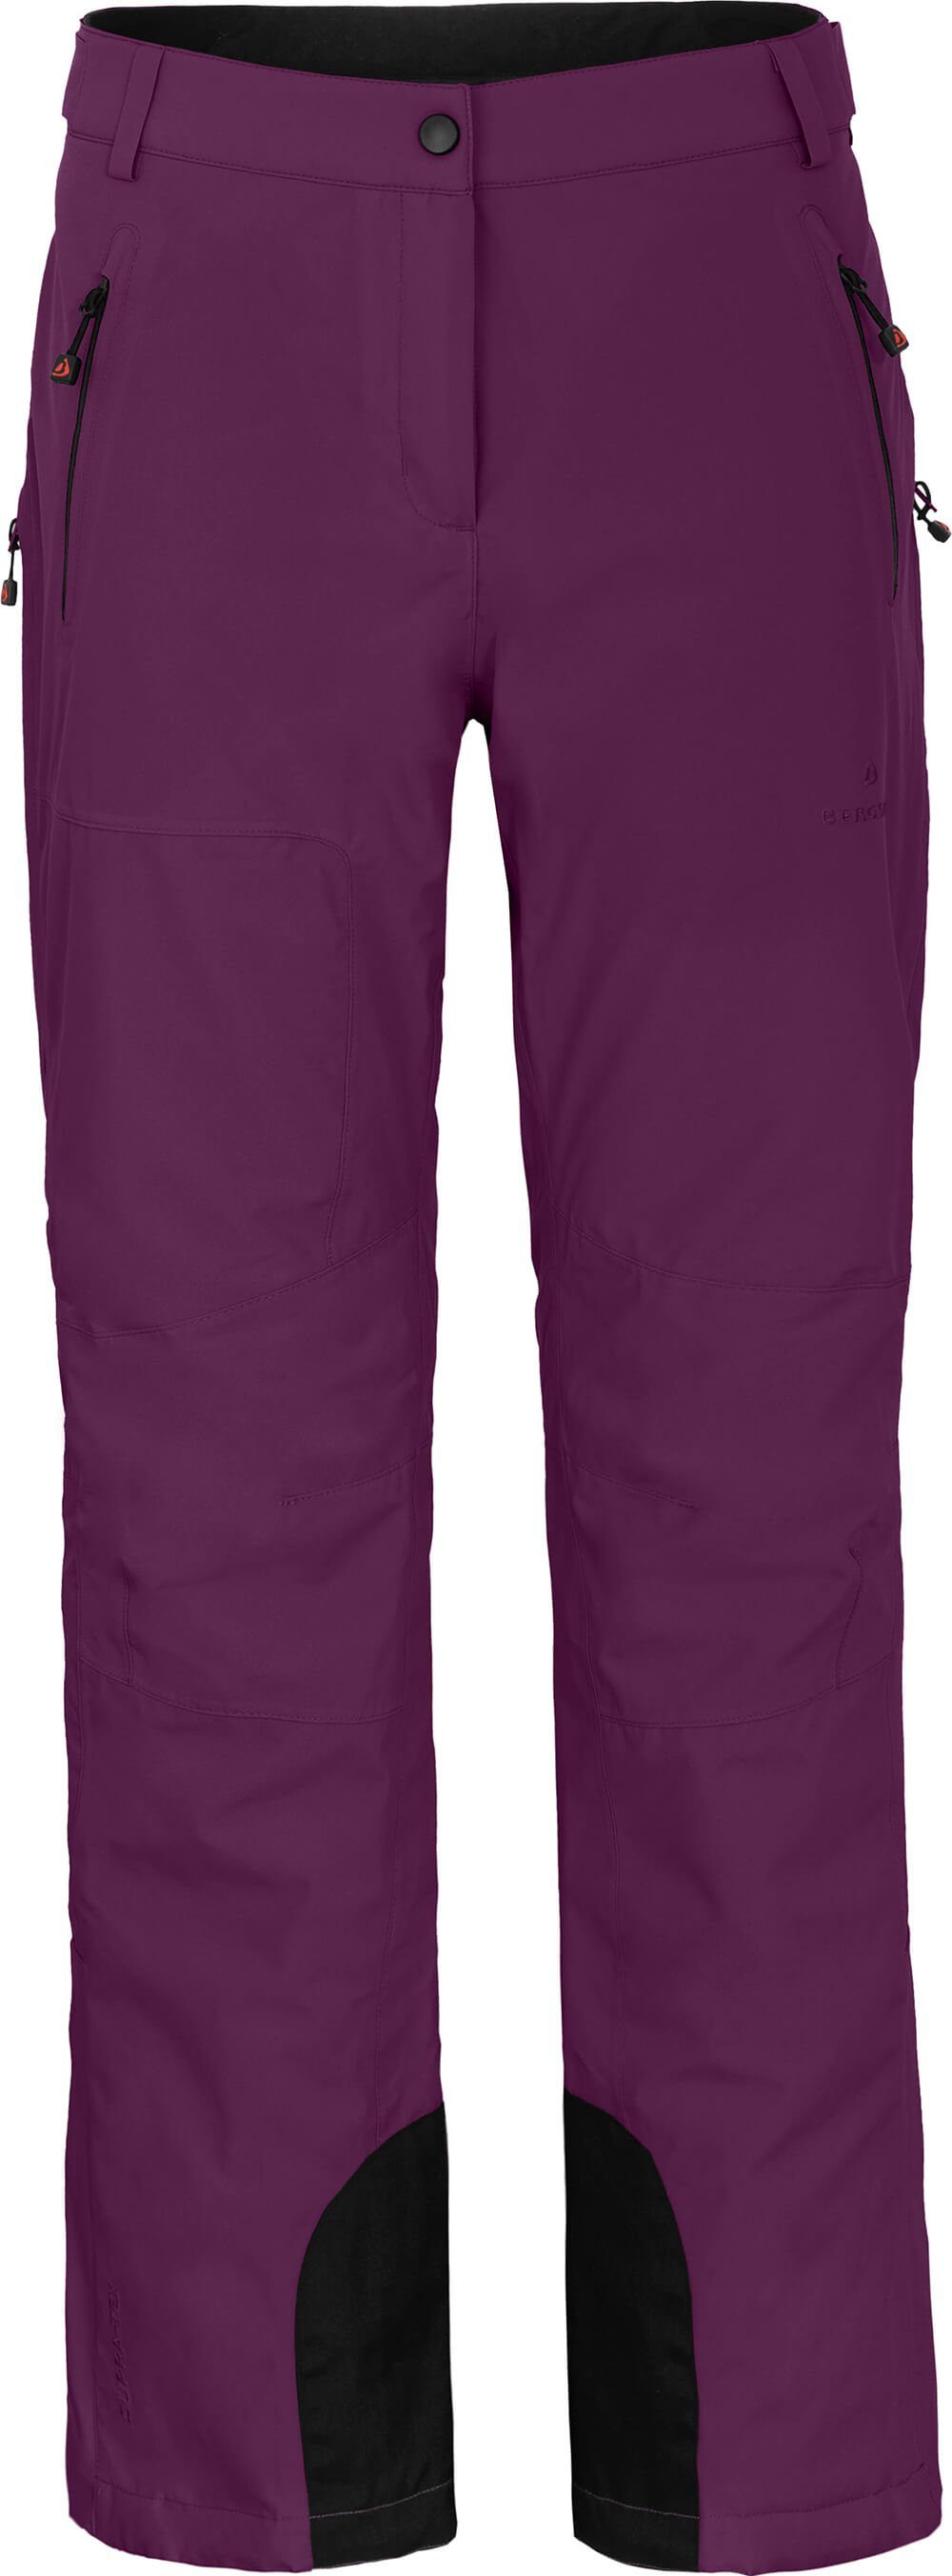 Bergson Skihose ICE light Damen Skihose, unwattiert, 20000 mm Wassersäule, Kurzgrößen, dunkel violett